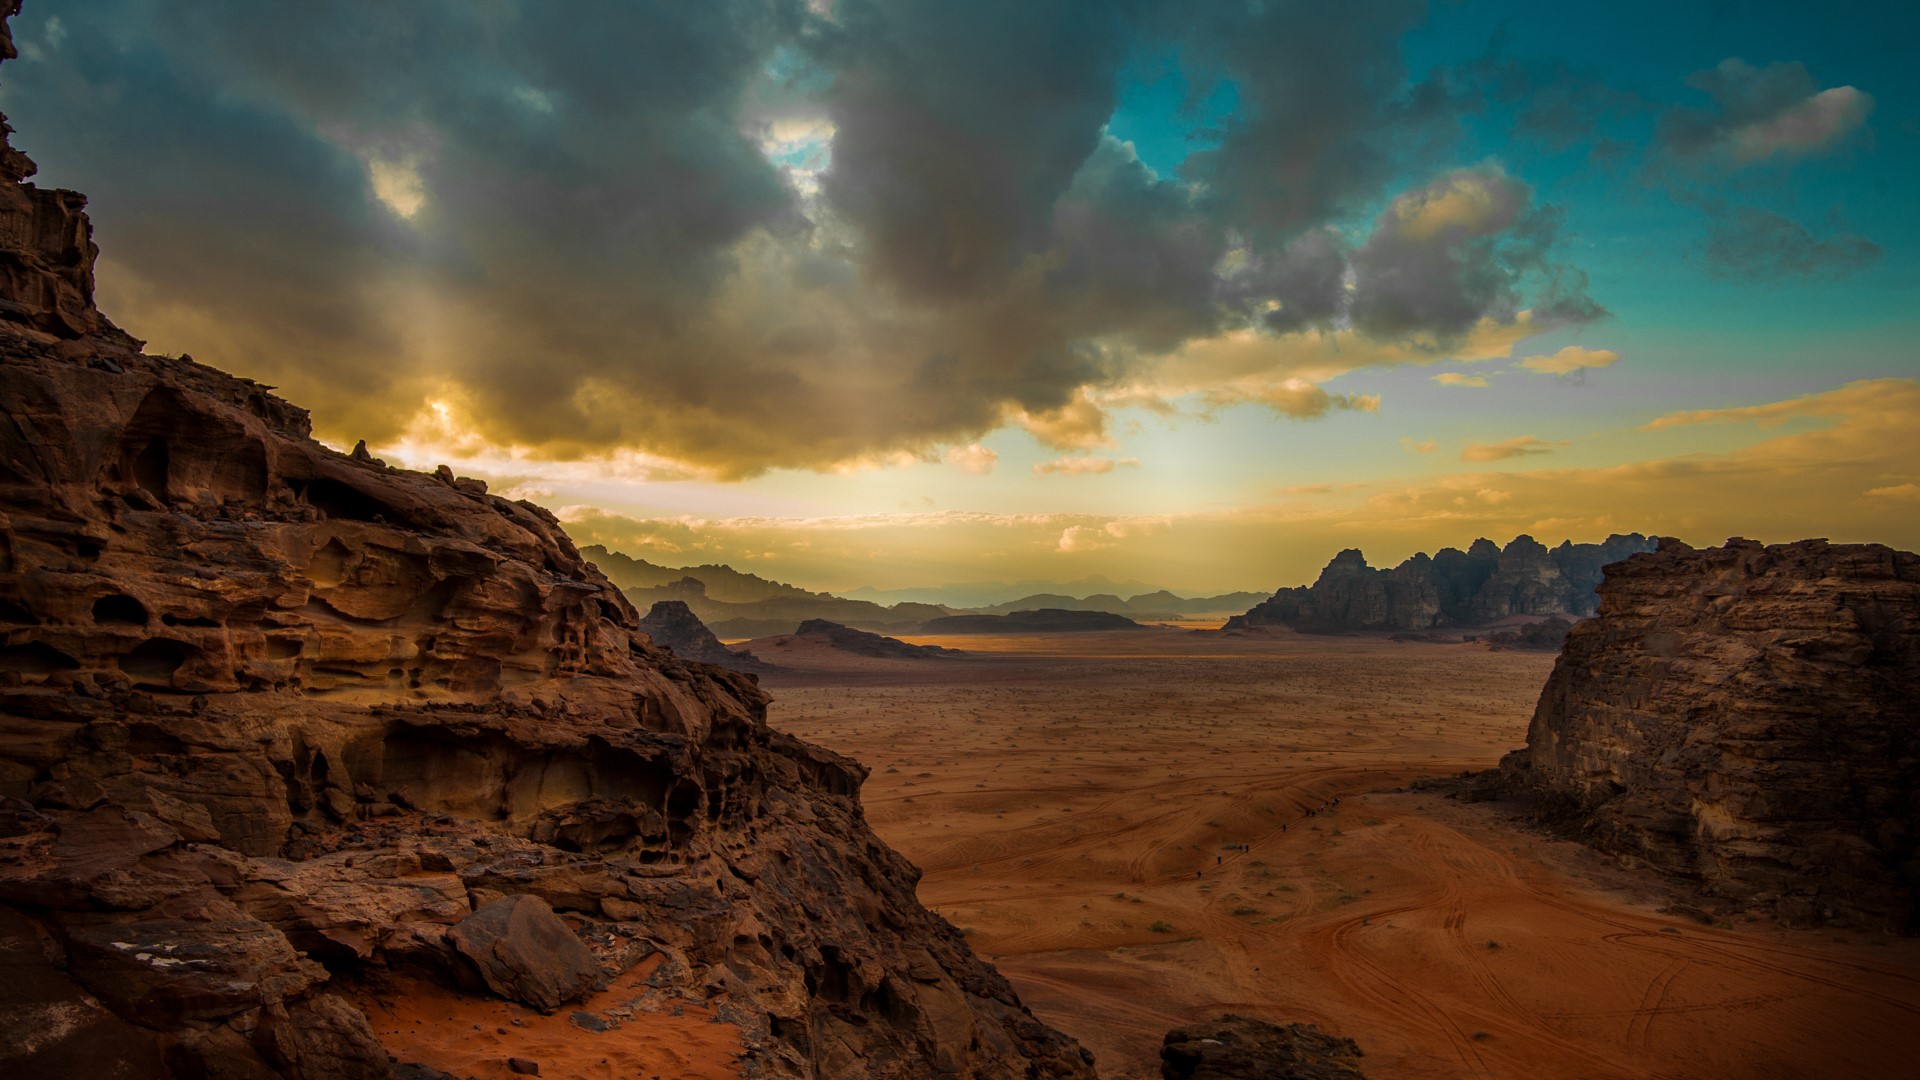 Desert and cliff, Wadi Rum, Jordan | Windows Spotlight Images